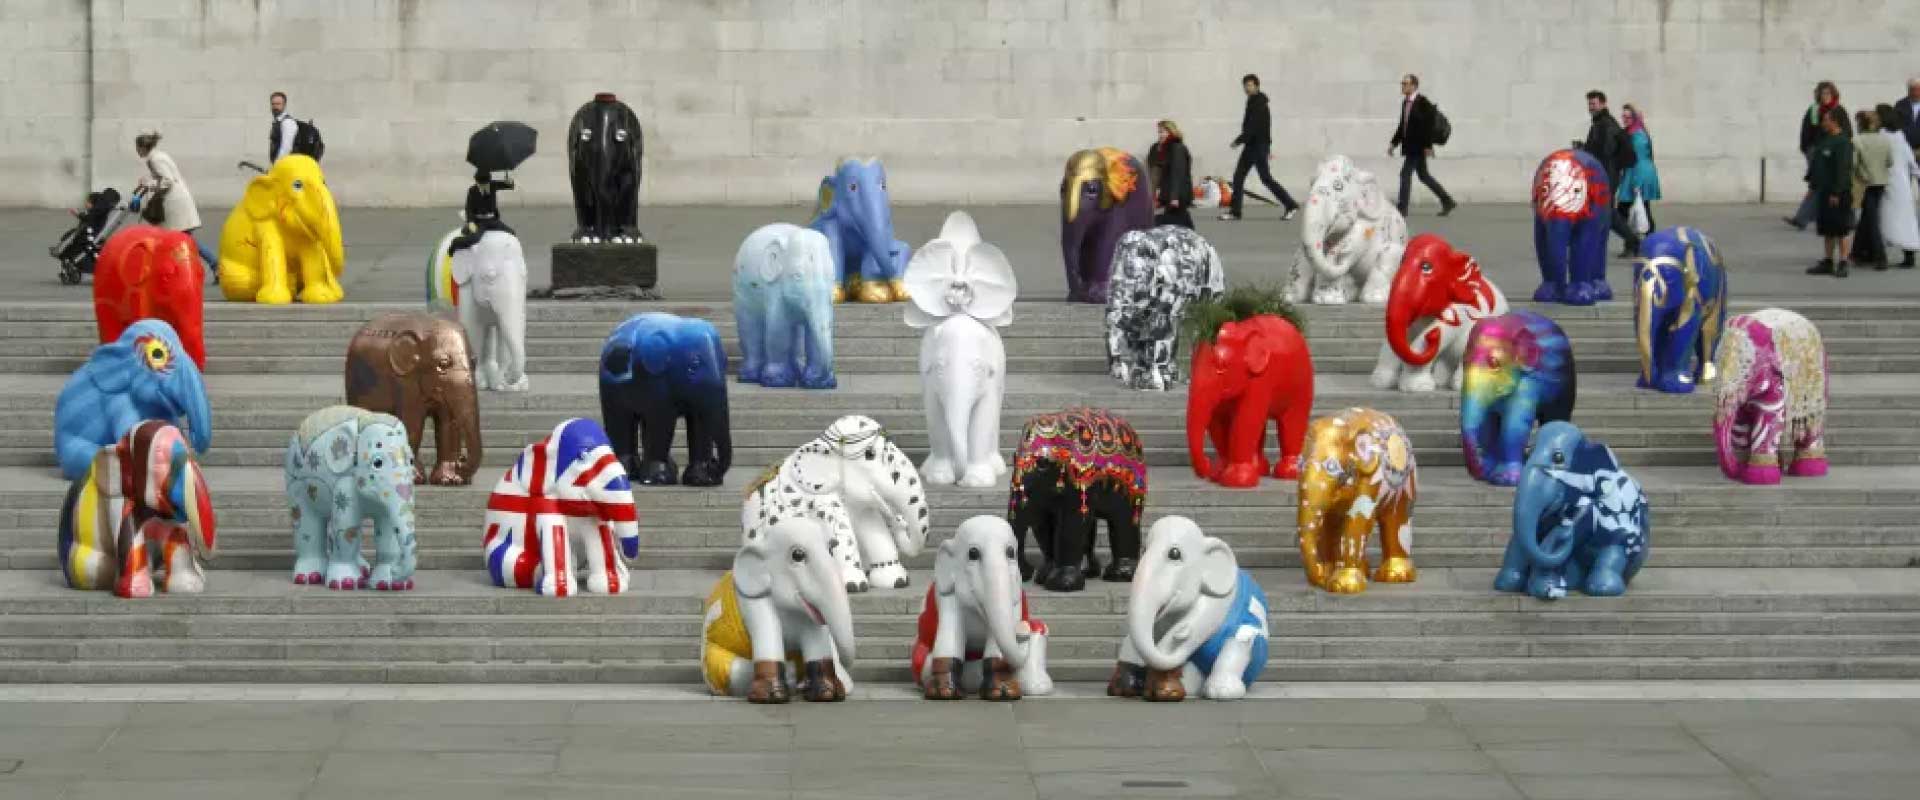 Elephant Parade in London